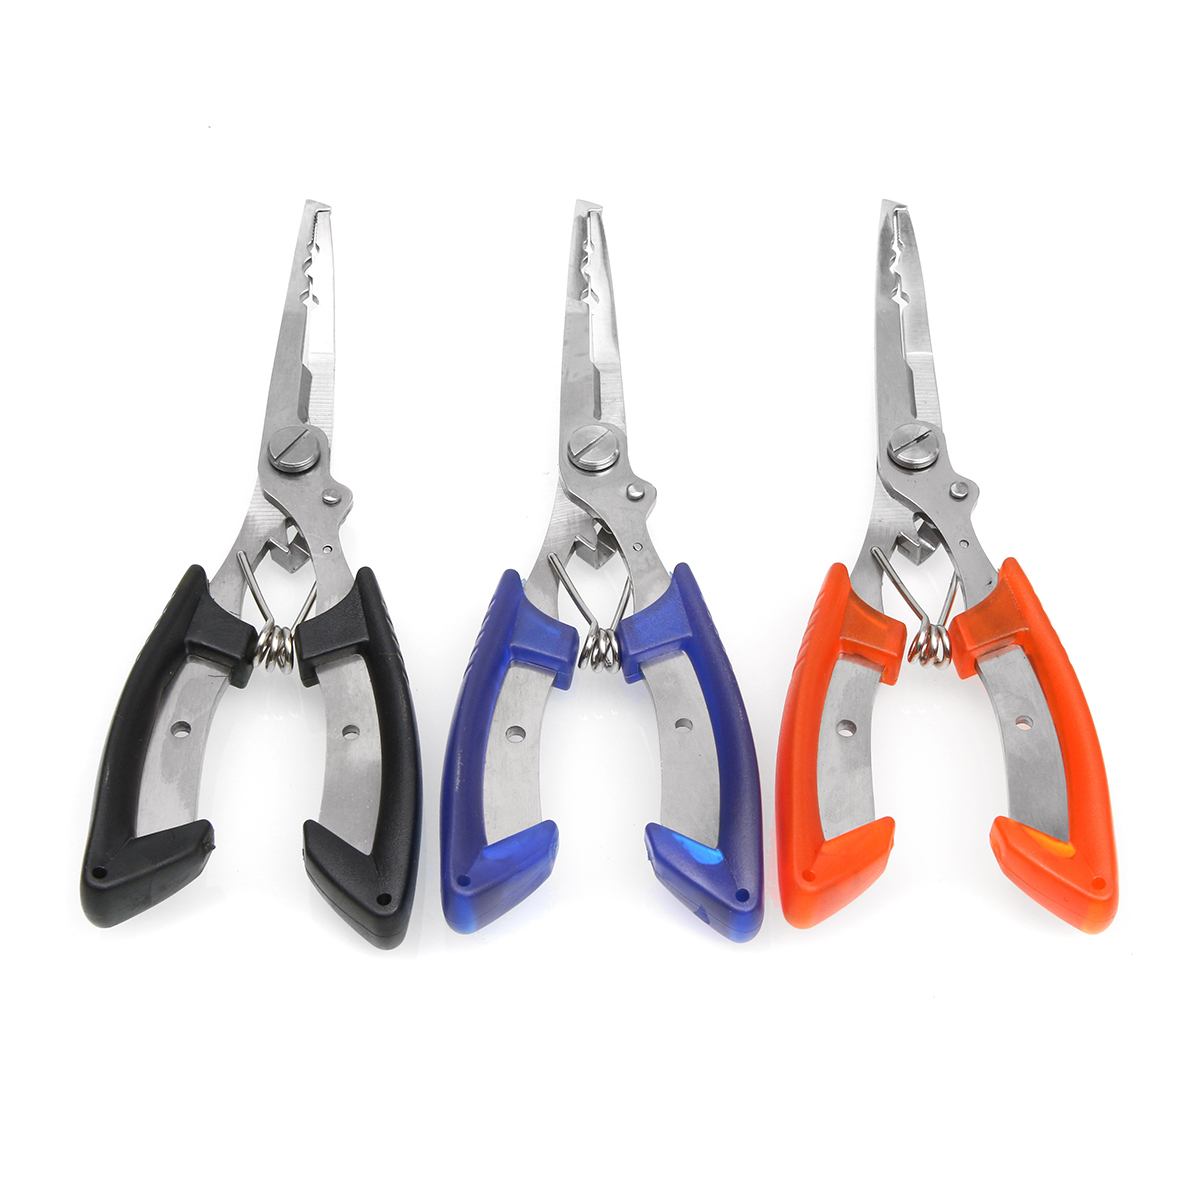 Stainless-Steel-Fishing-Pliers-Plierweiter-Scissors-Line-Cutter-Hook-Tackle-Tool-1151463-3